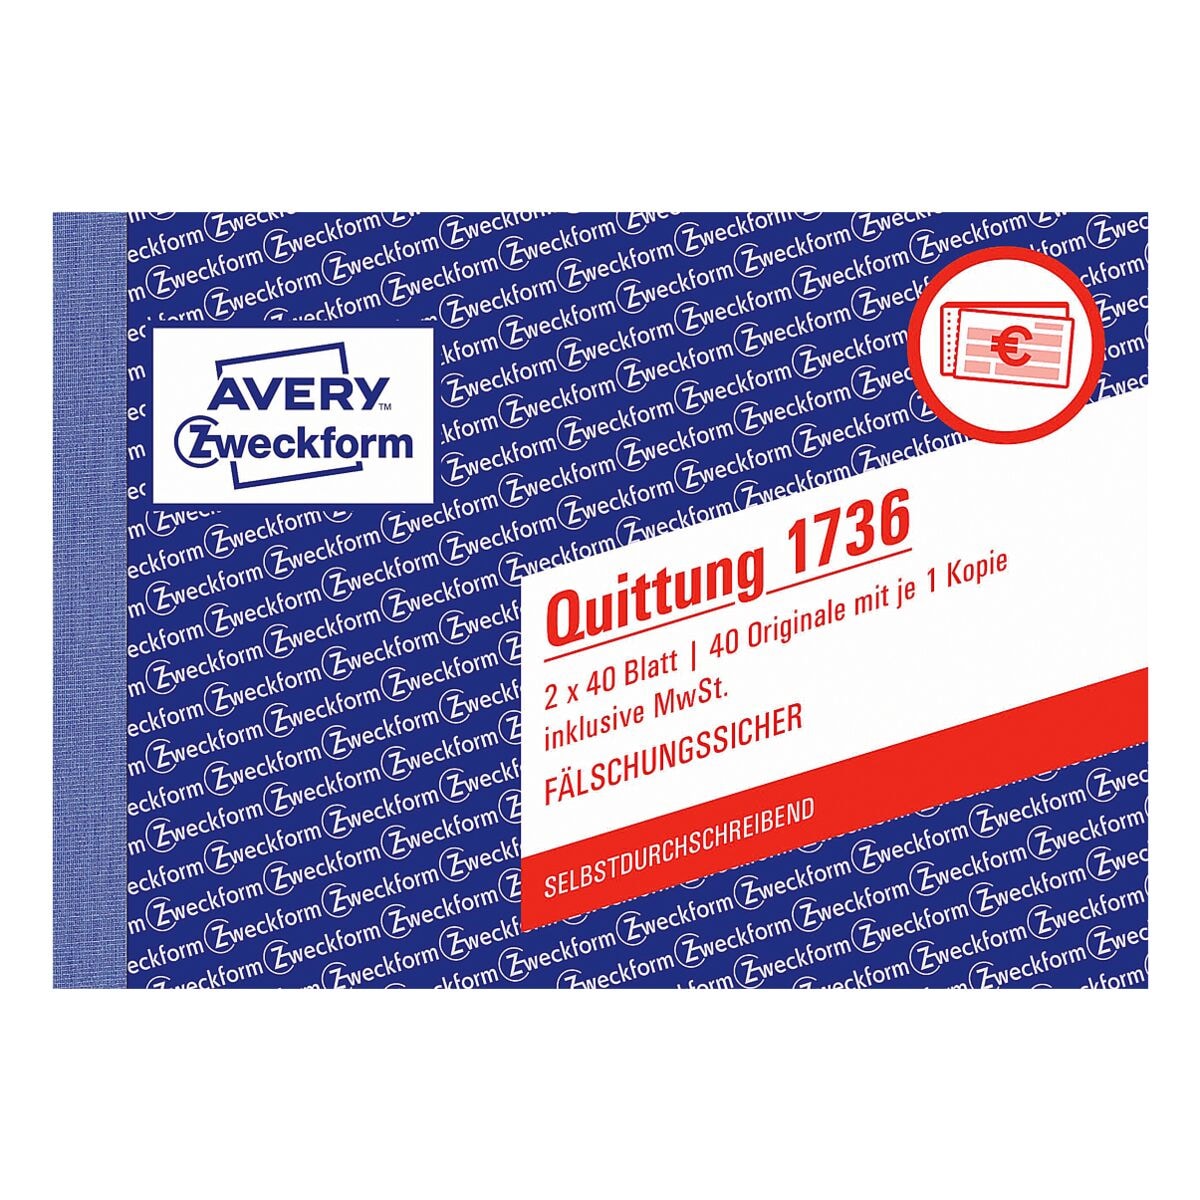 Avery Zweckform Formularbuch Quittung inkl. MwSt. - 2-fach 40 Blatt